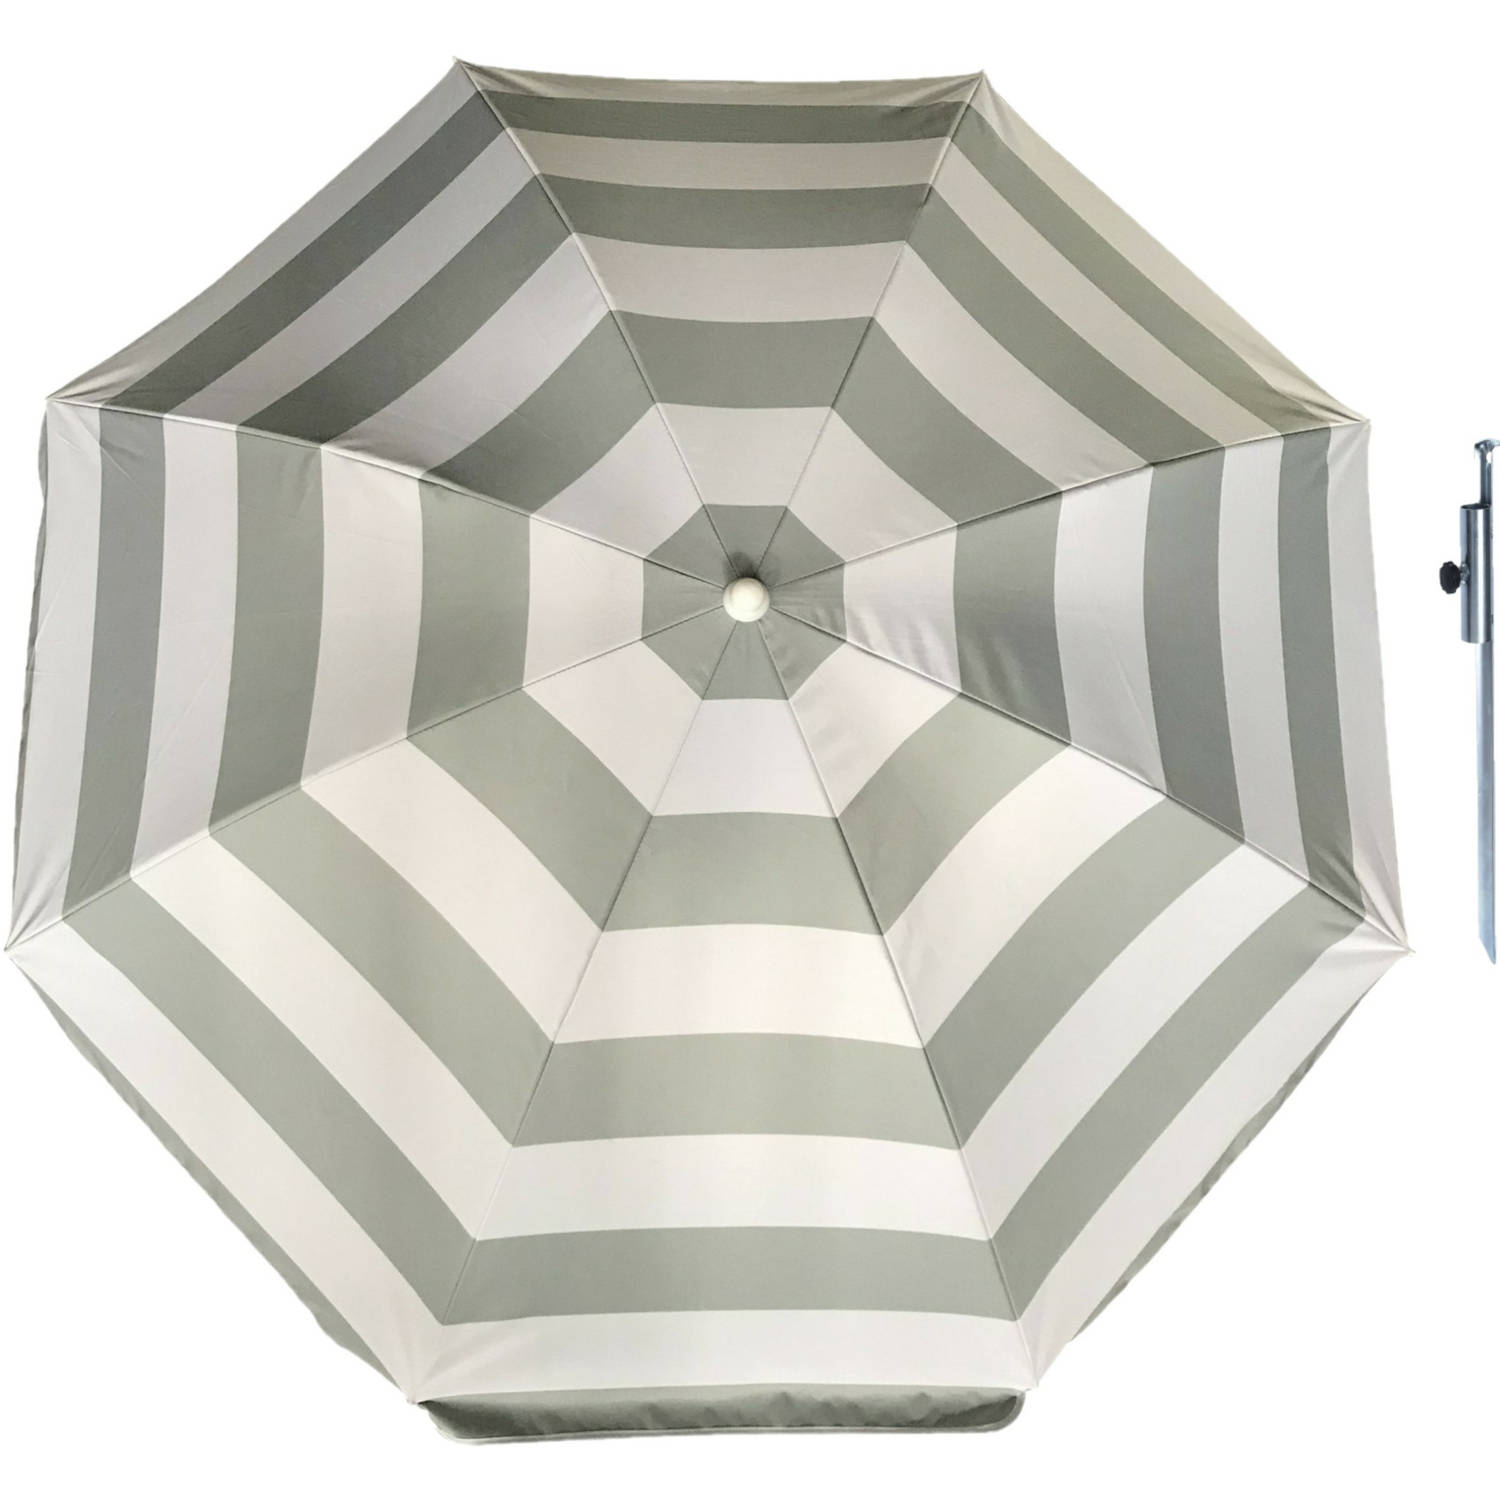 Parasol Zilver-wit D160 cm incl. draagtas parasolharing 49 cm Parasols